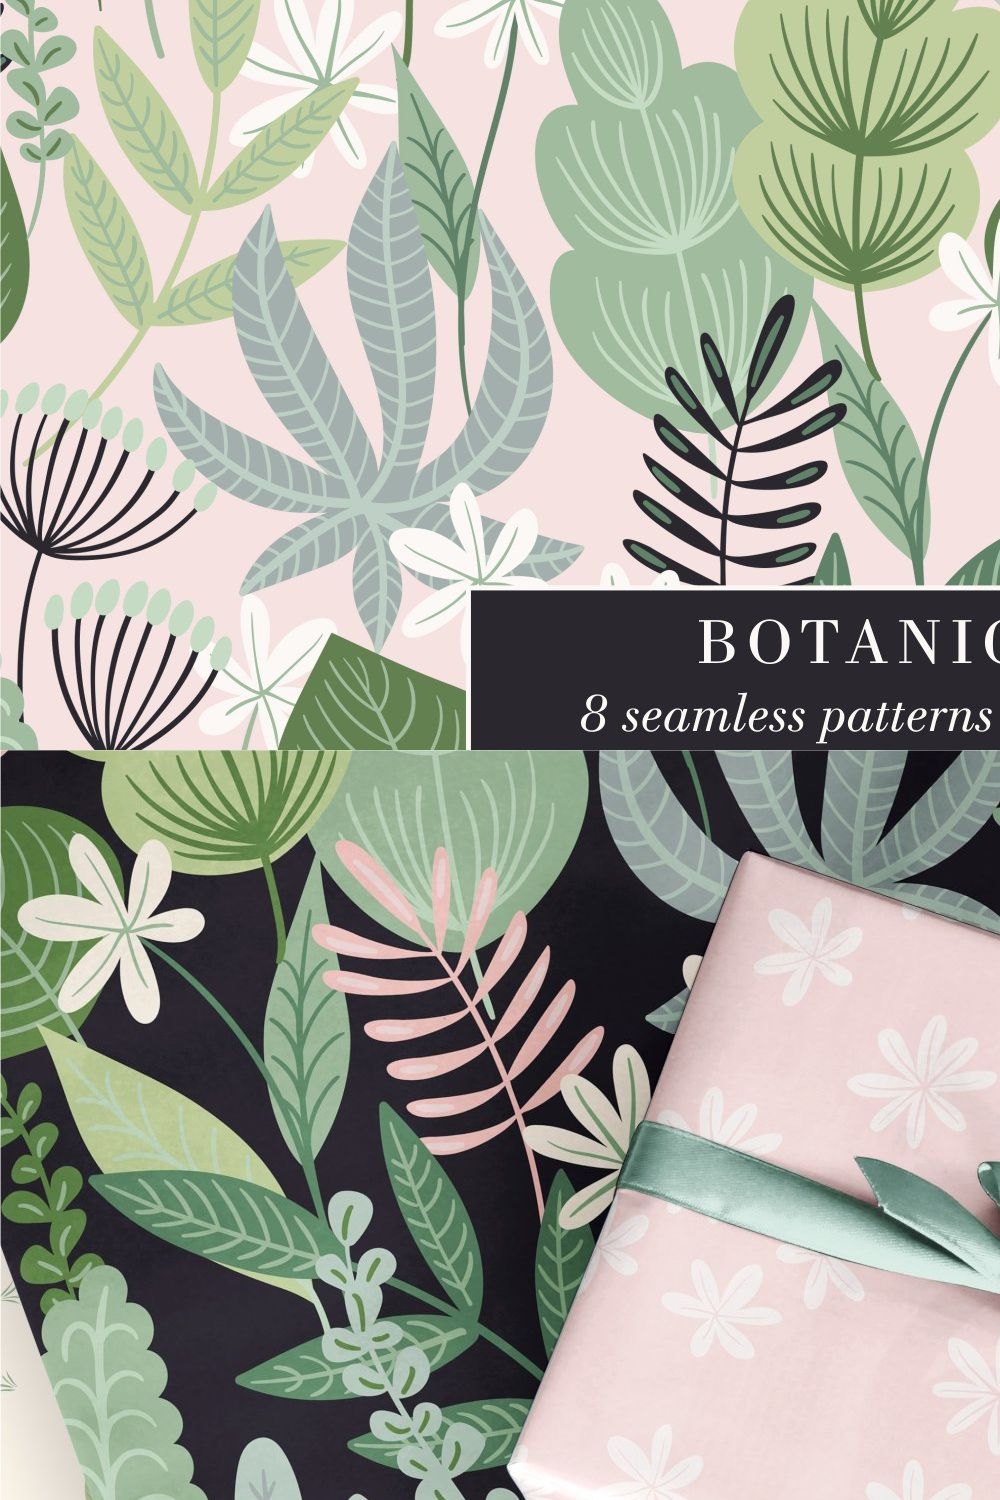 Botanical patterns & elements pinterest preview image.